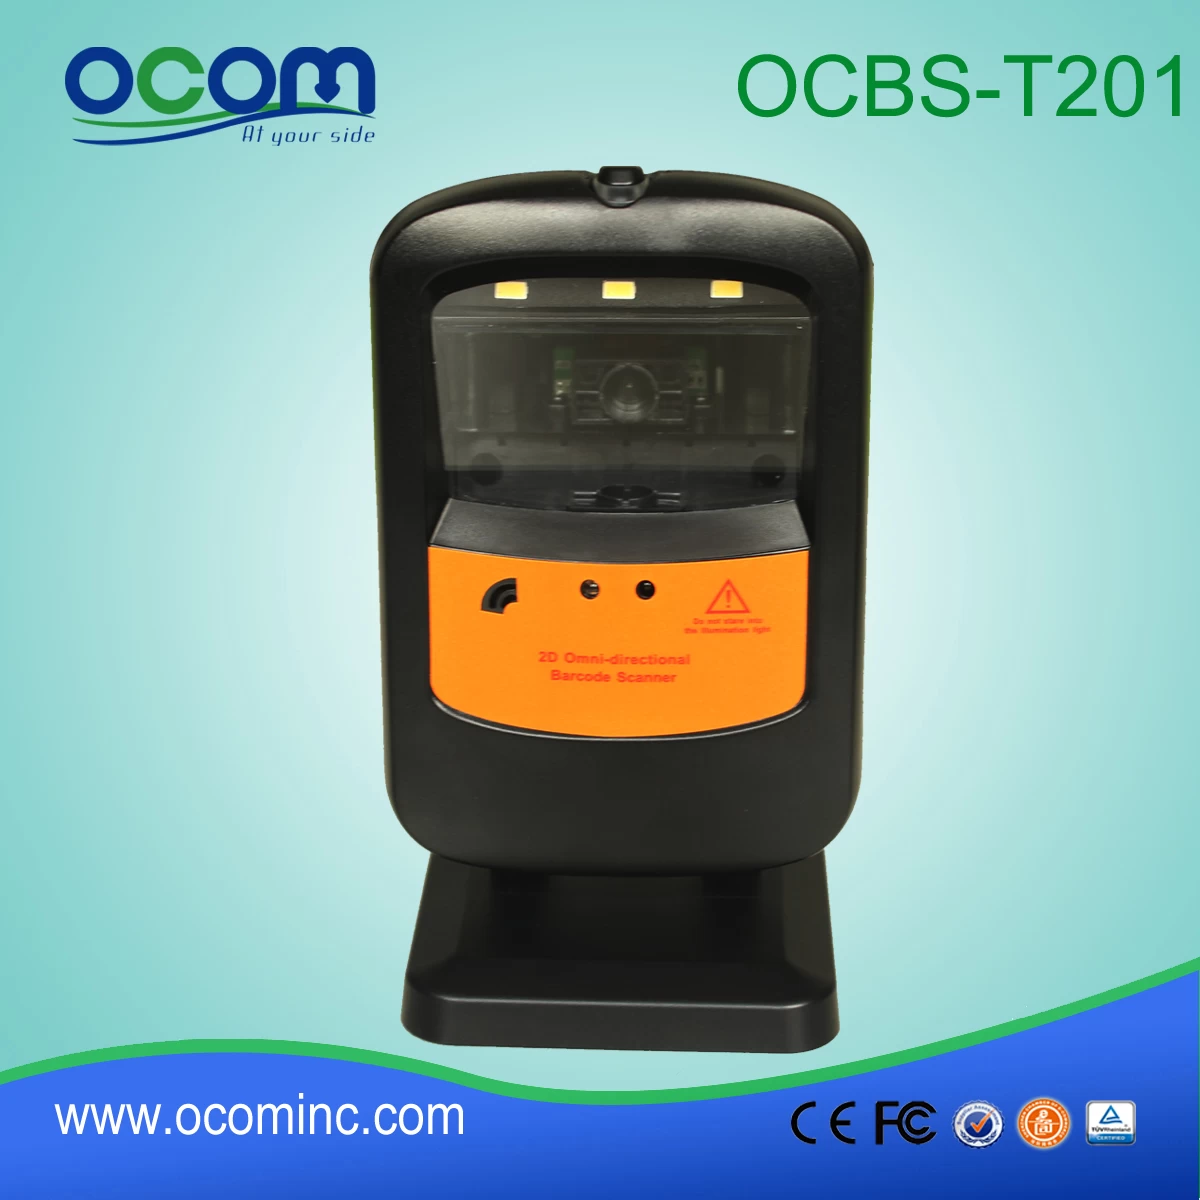 OCBS-T201:omnidirectional barcode scanner price, barcode reader module